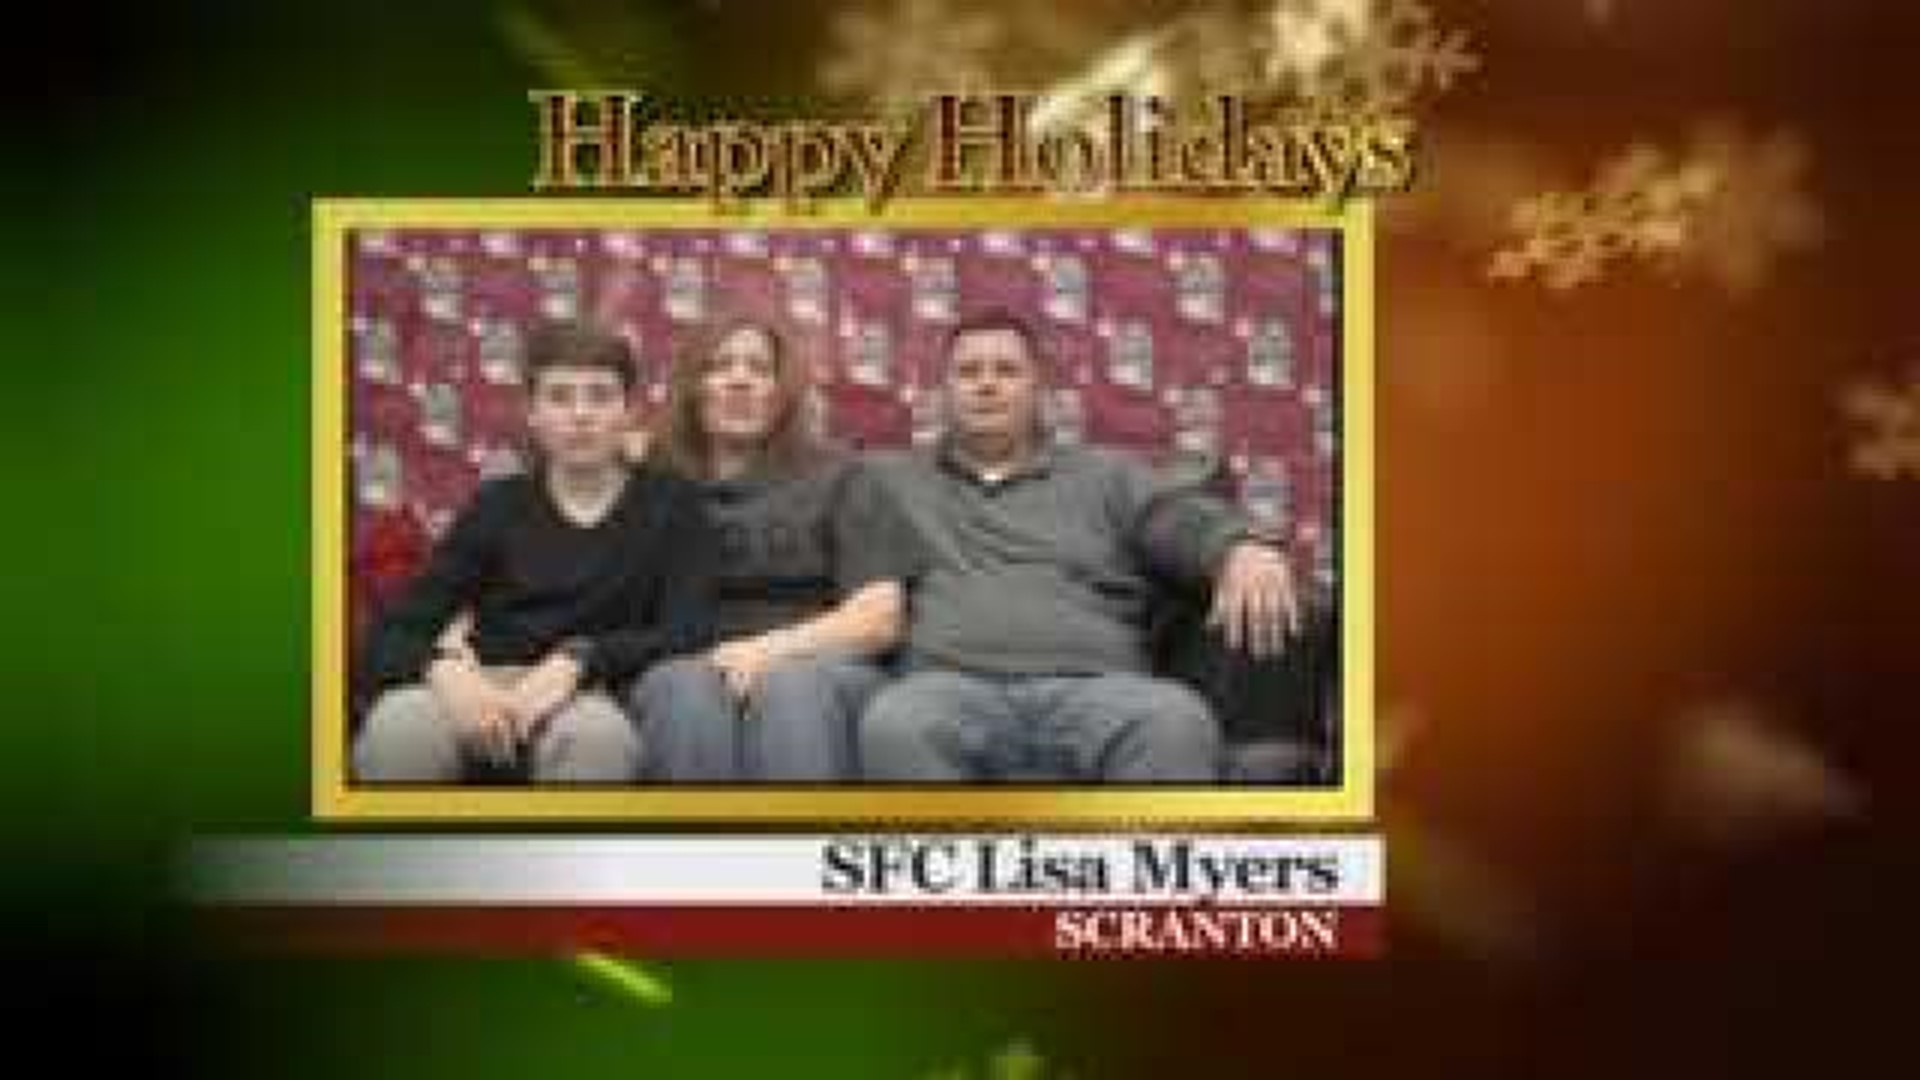 Military Greeting: SFC Lisa Myers